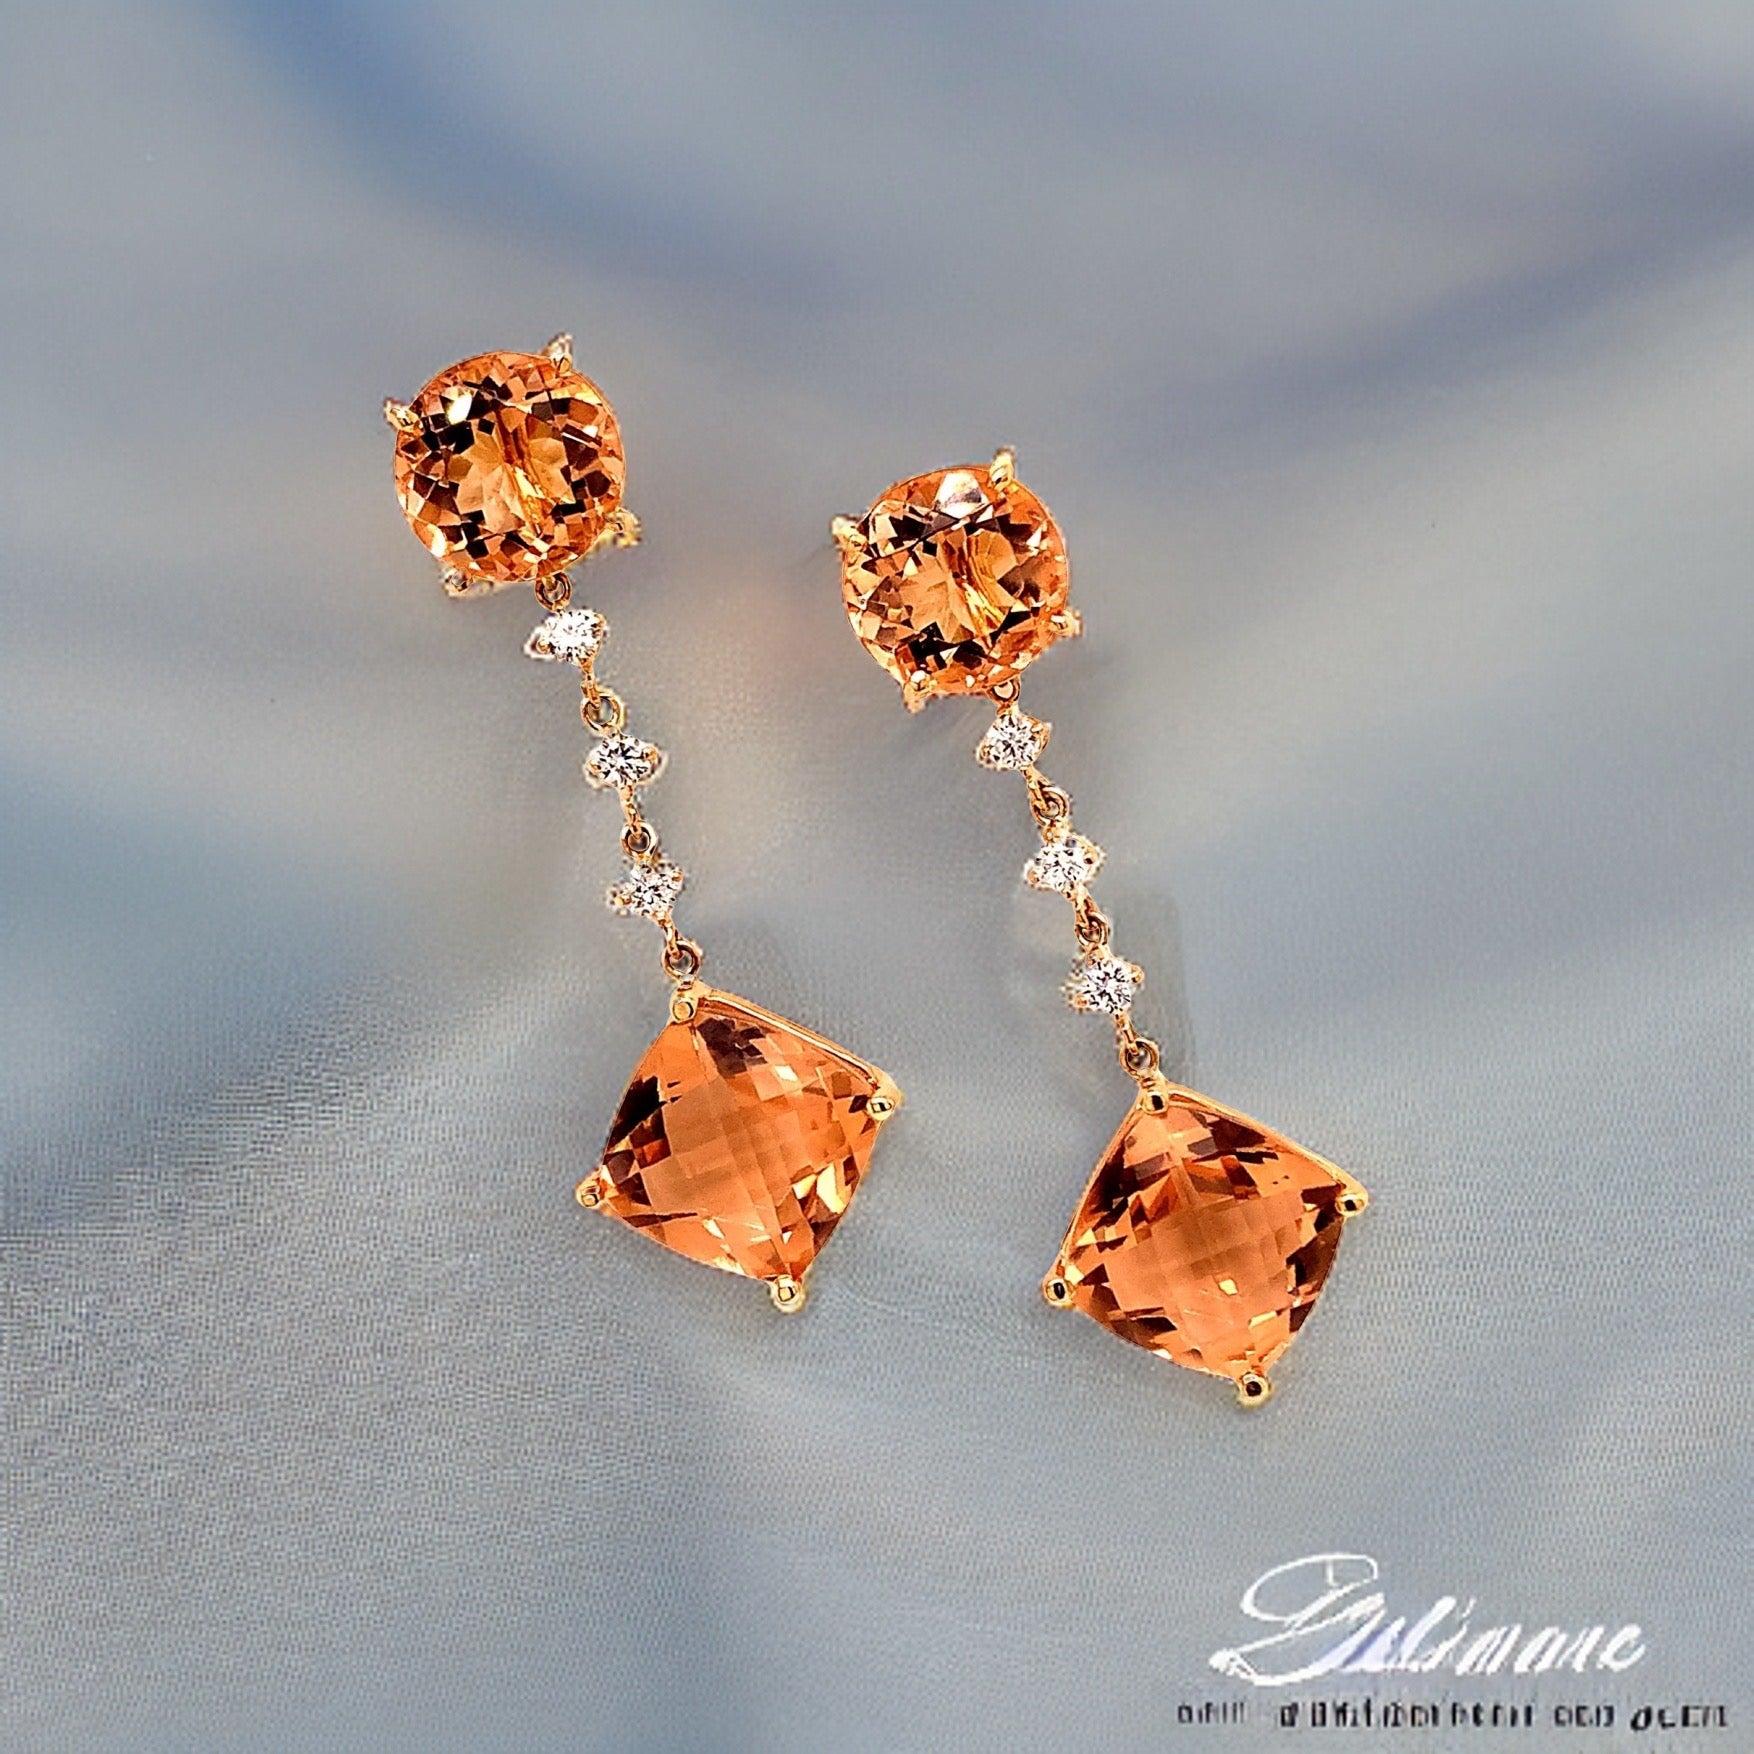 Natural Morganite Diamond Earrings 14k Gold 10.1 TCW Certified $5,950 111536 - Certified Fine Jewelry